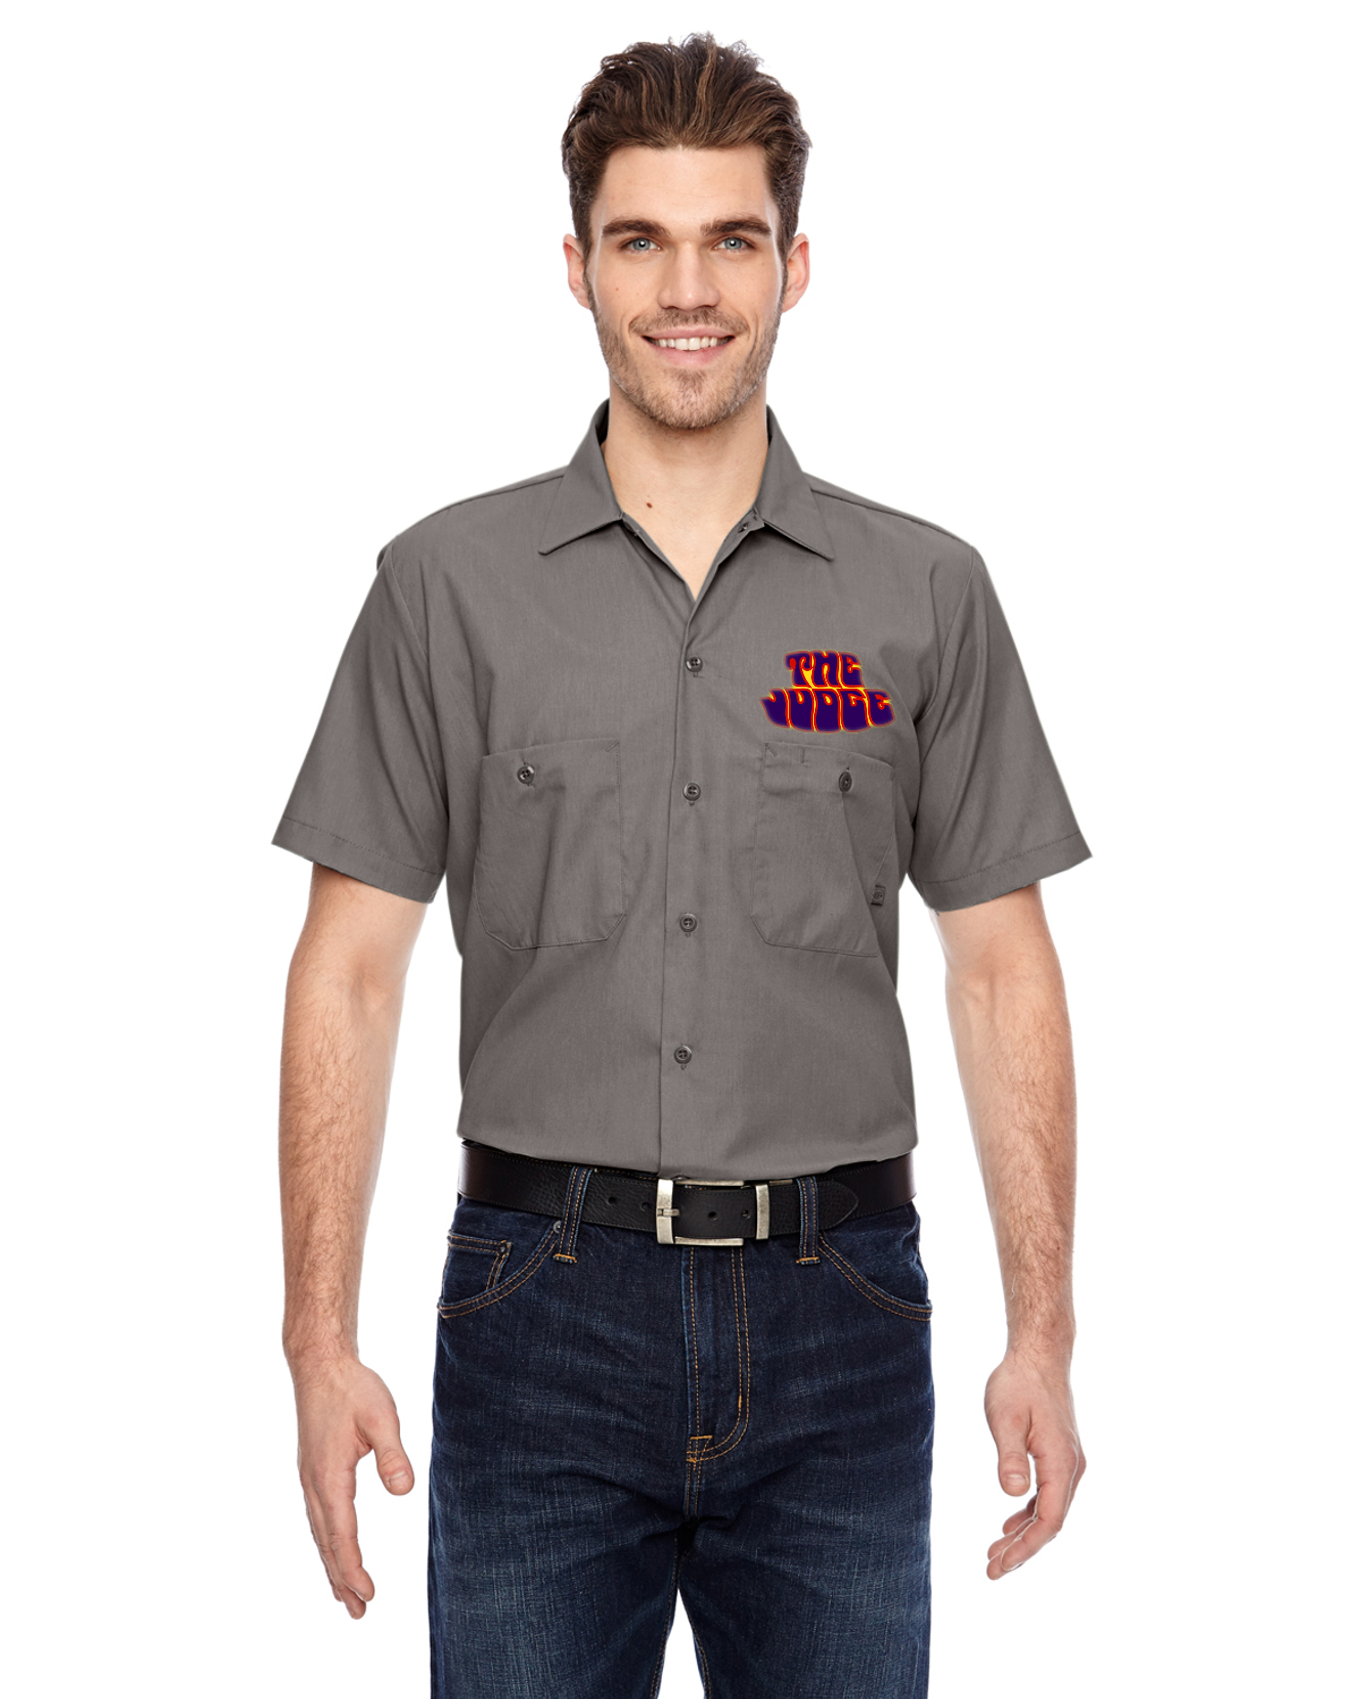 mechanic shirt,work shirt,industrial shirt,pontiac – GMClubapparel.com